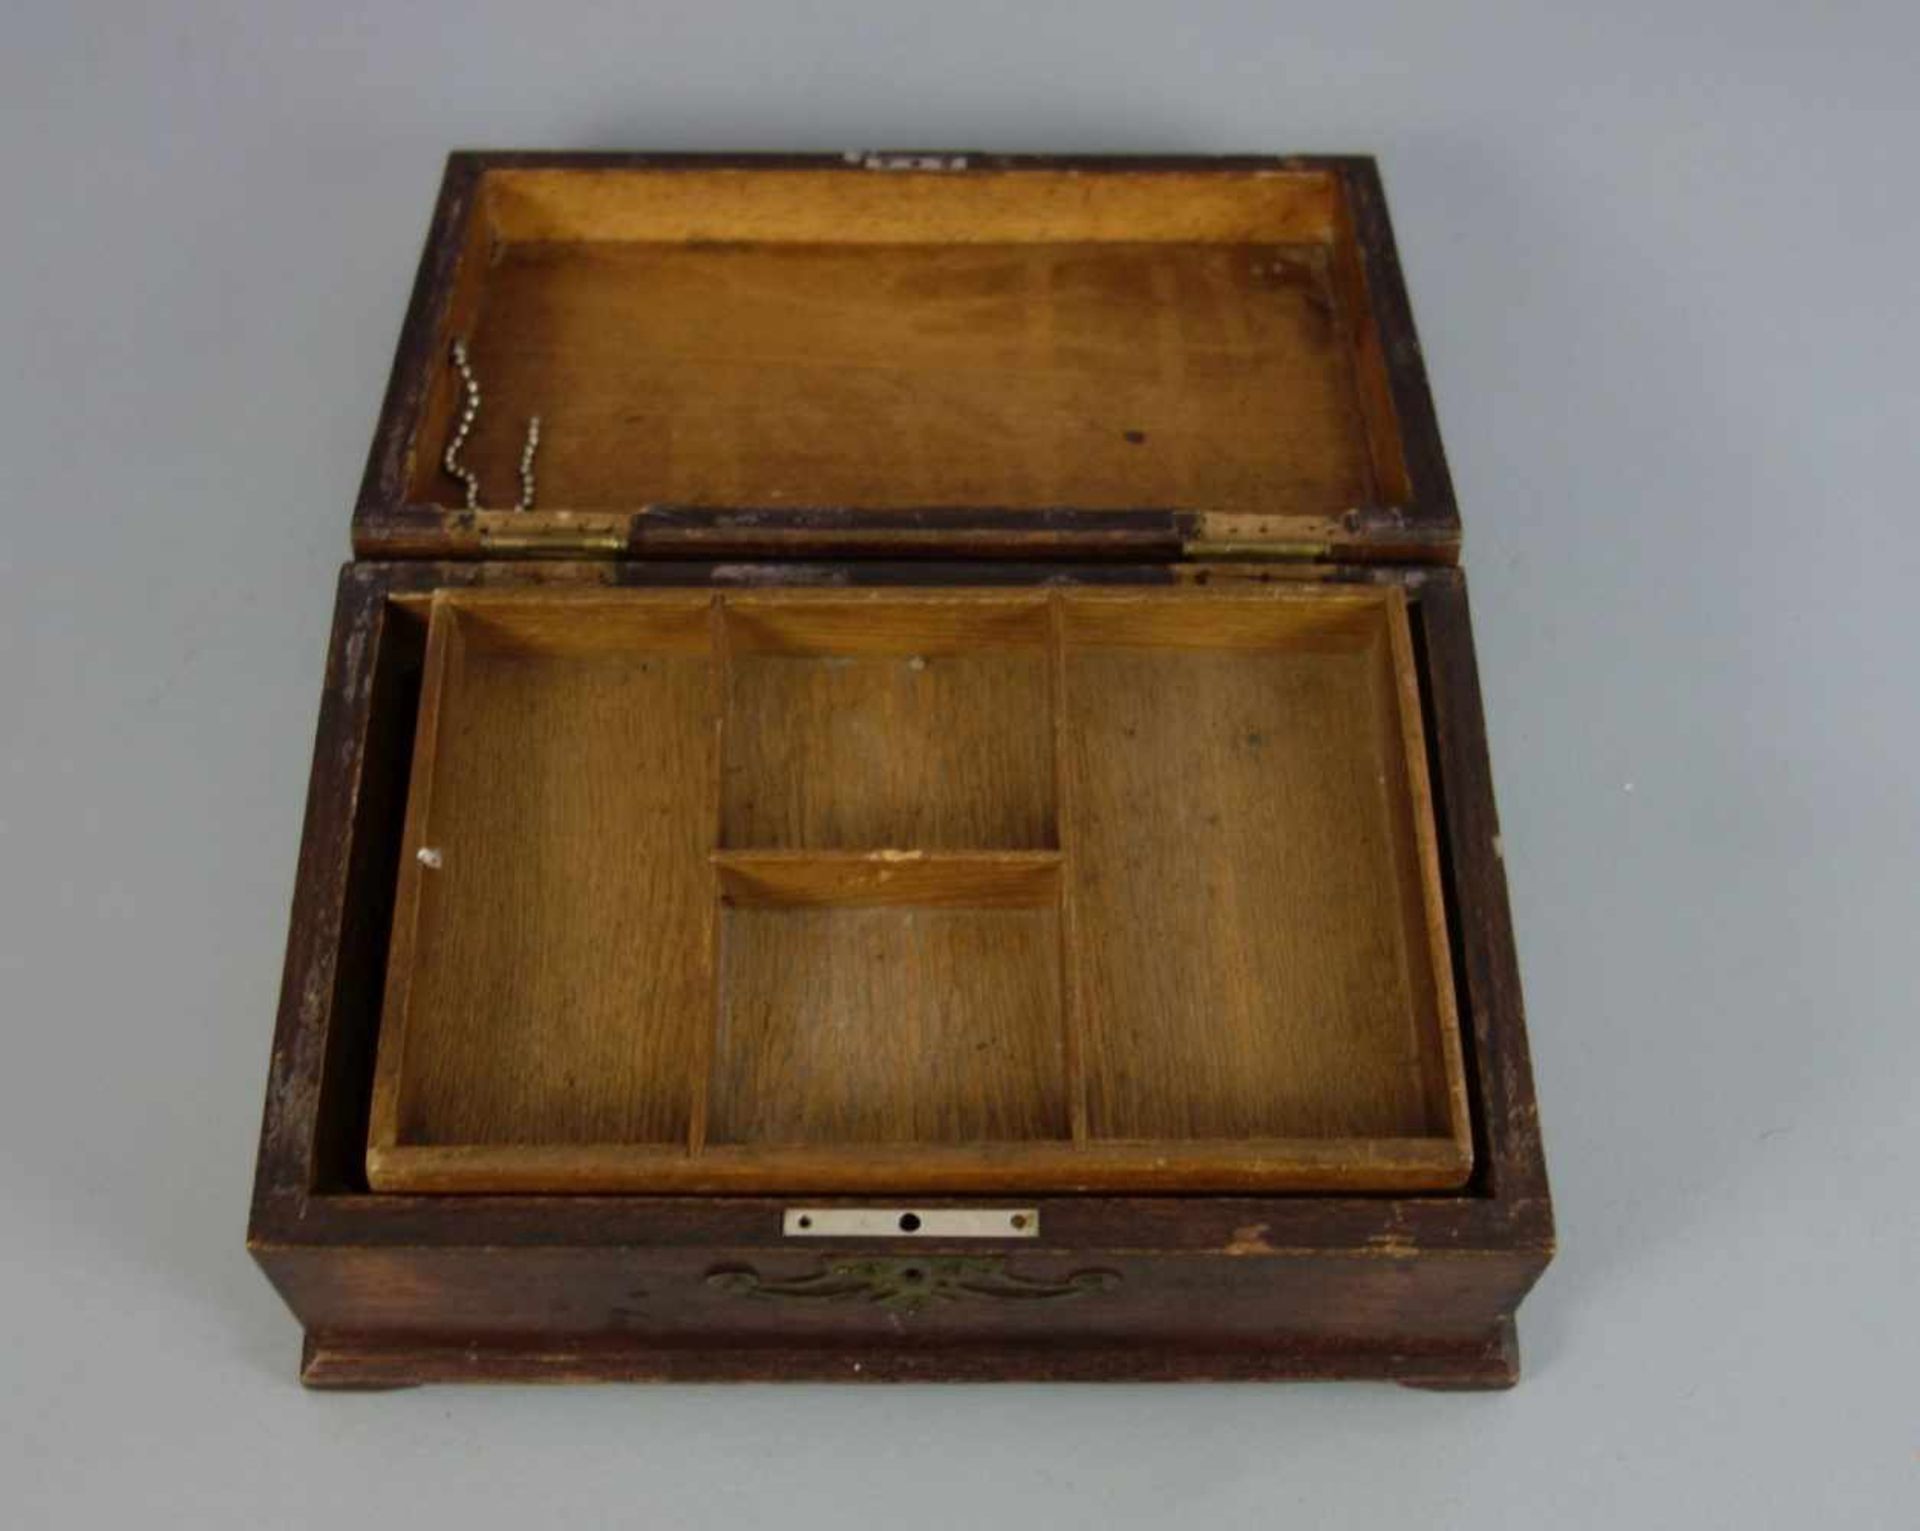 JUGENDSTIL SCHATULLE / art nouveau box, um 1900. Eiche, rotbraun lasiert. Rechteckige Schatulle - Bild 2 aus 5